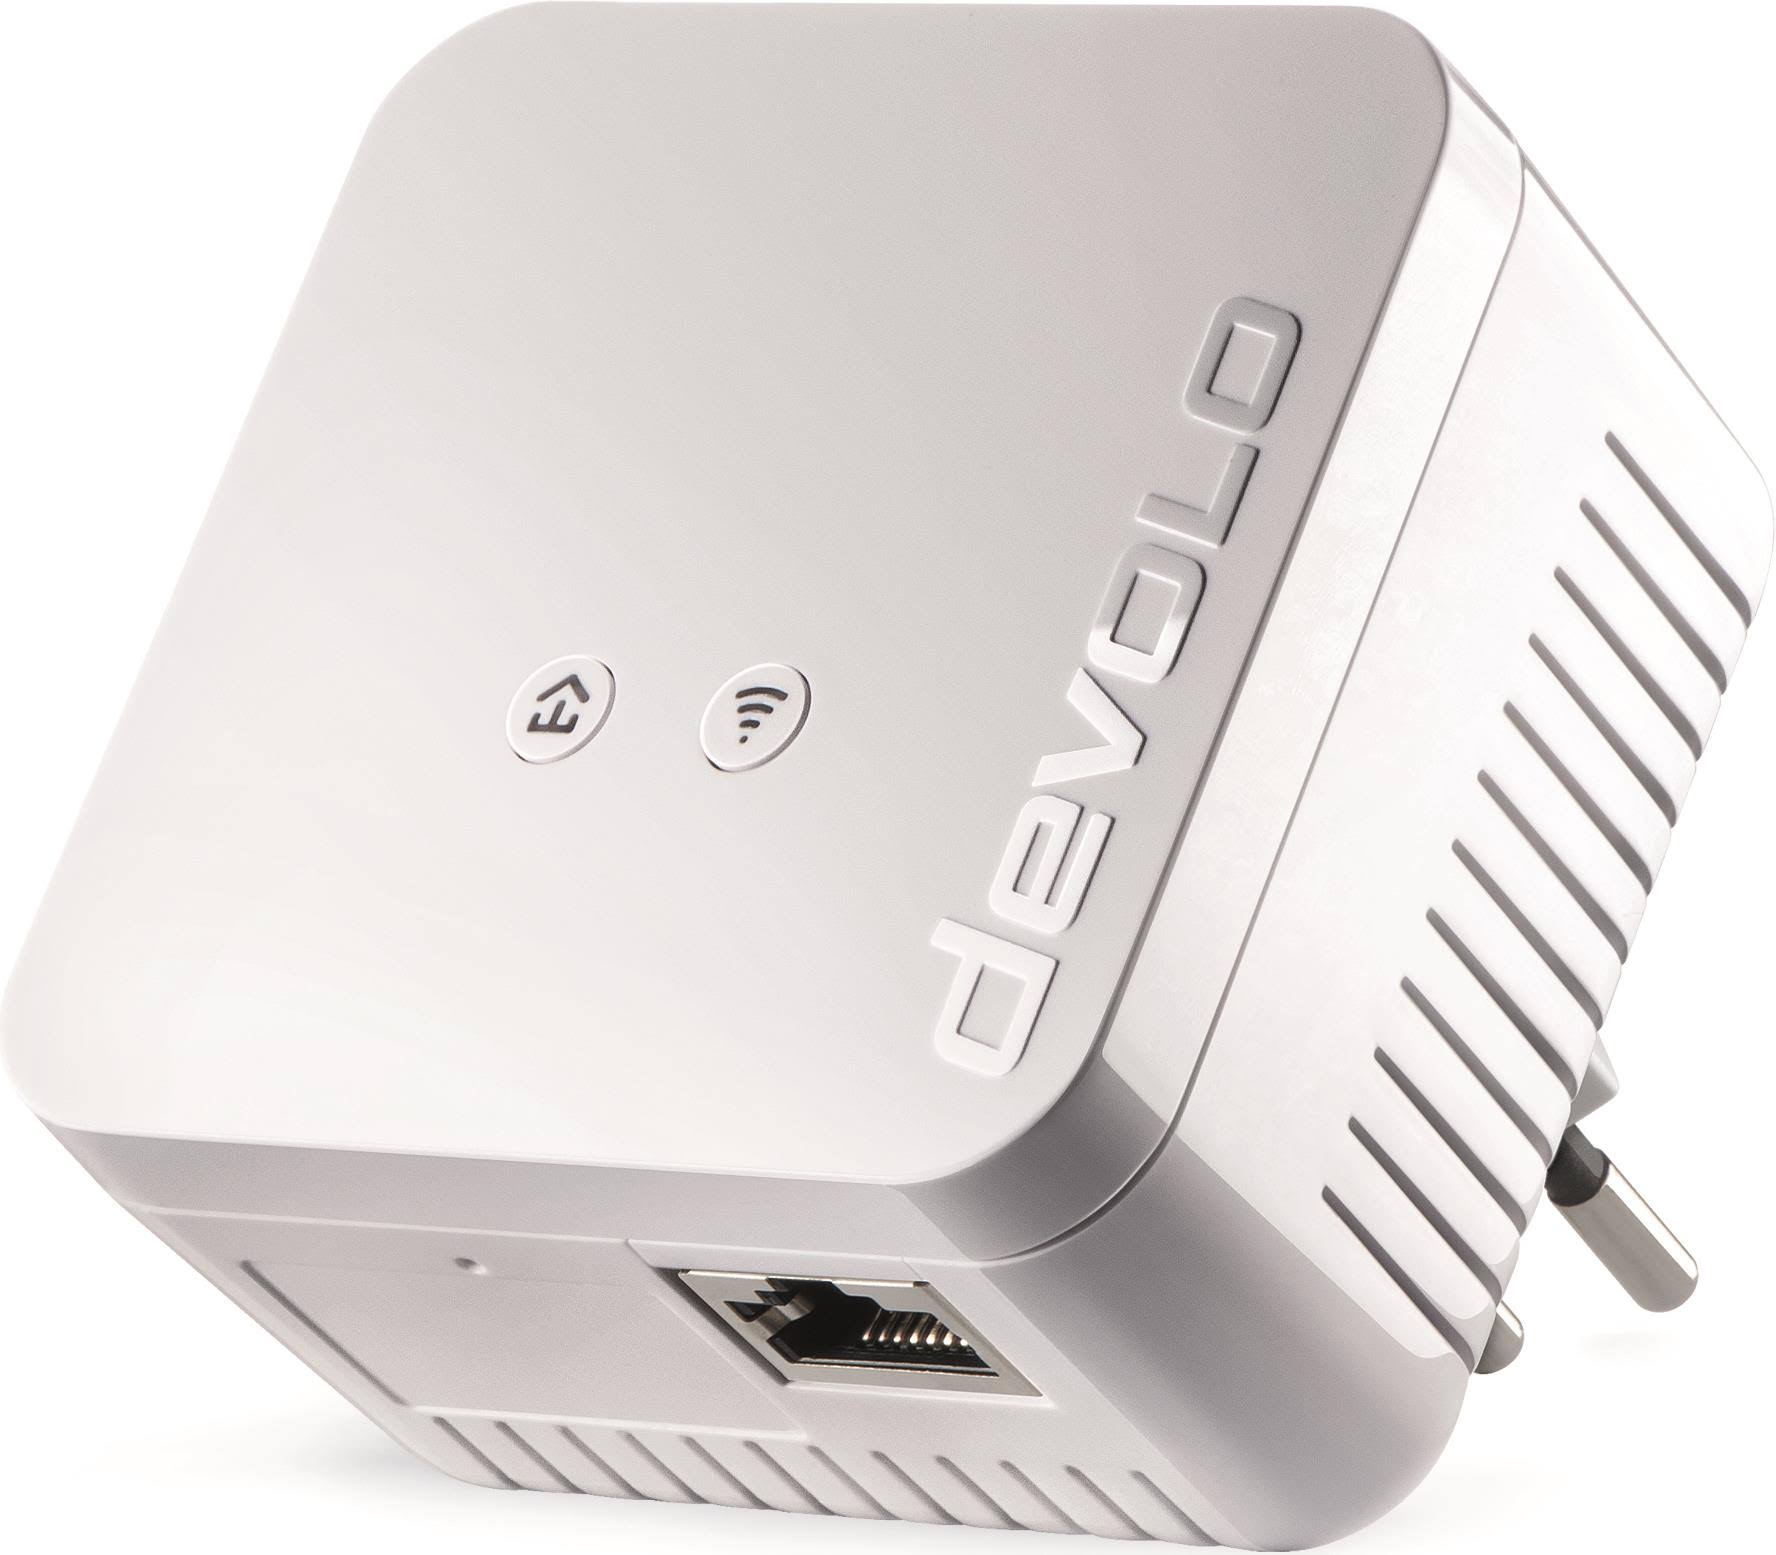 devolo dLAN 550 WiFi, single adapter - buy at